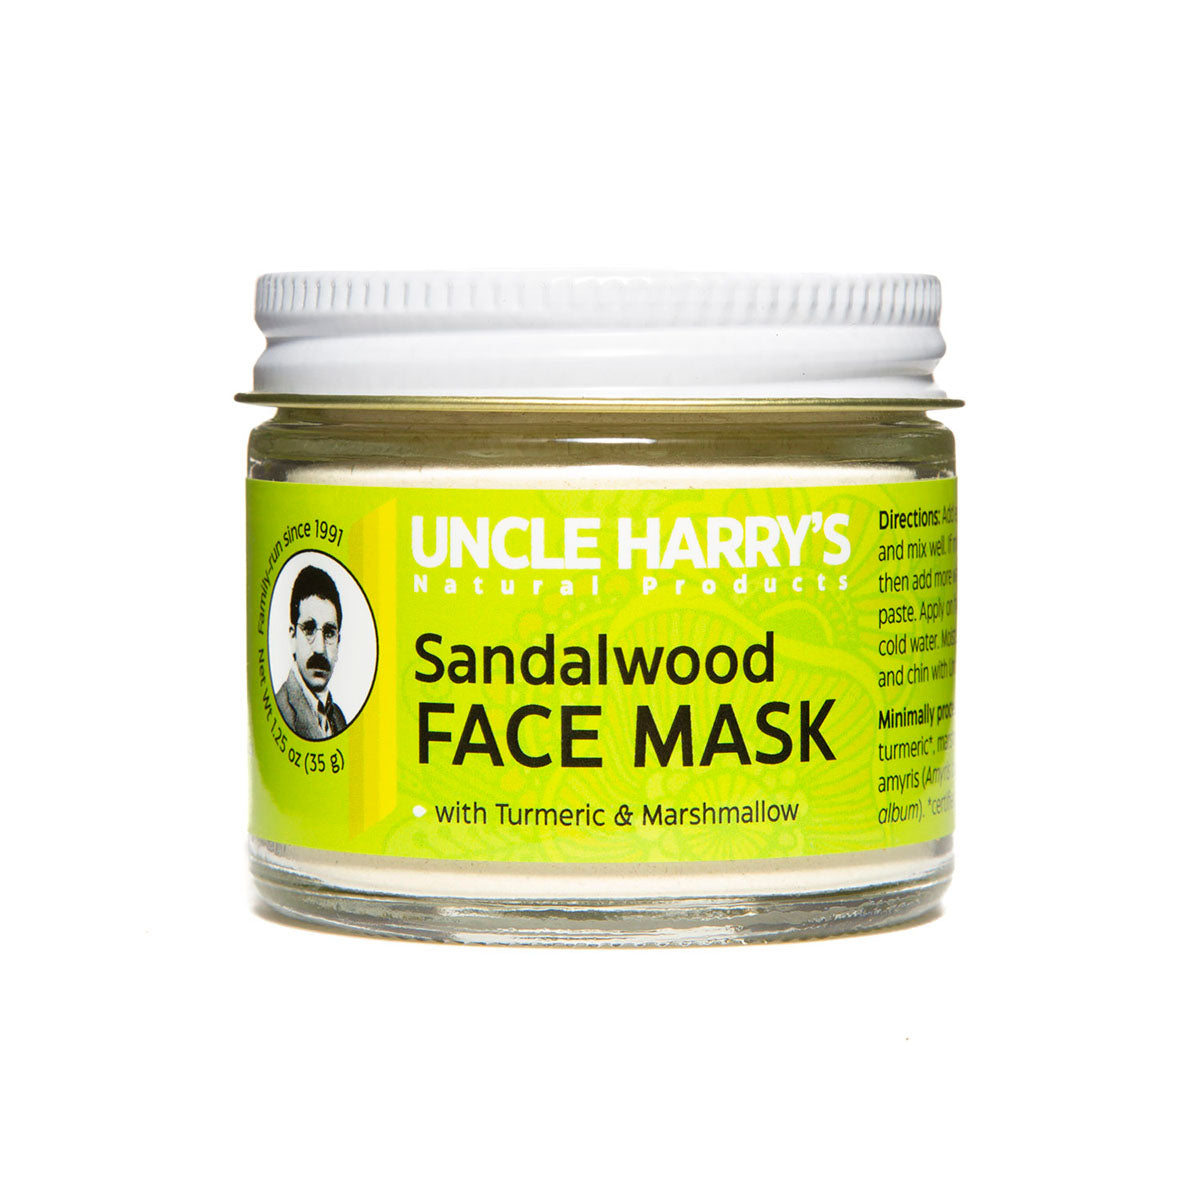 Sandalwood Face Mask 1.25 oz glass jar